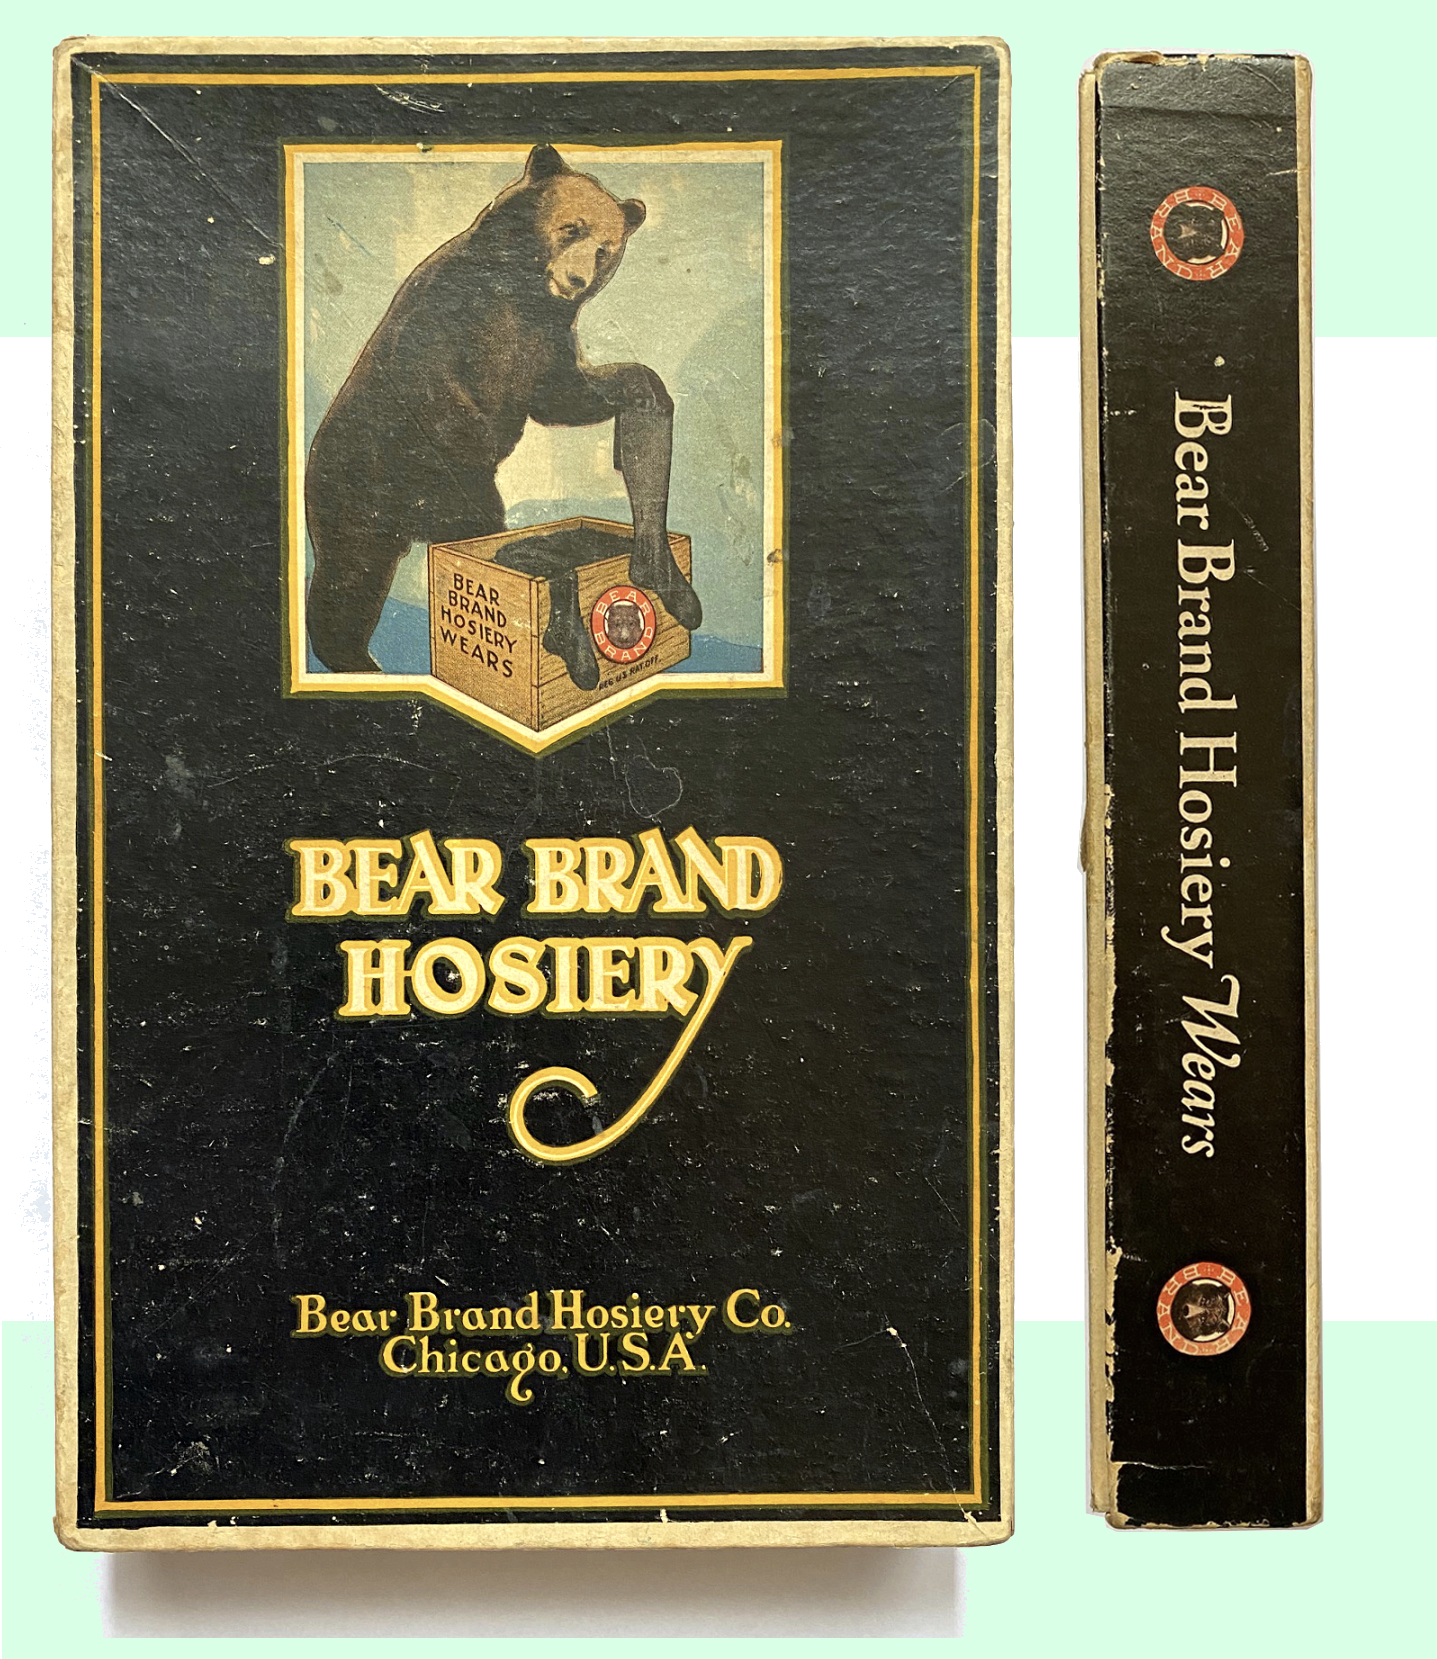 Bear Brand Hosiery history